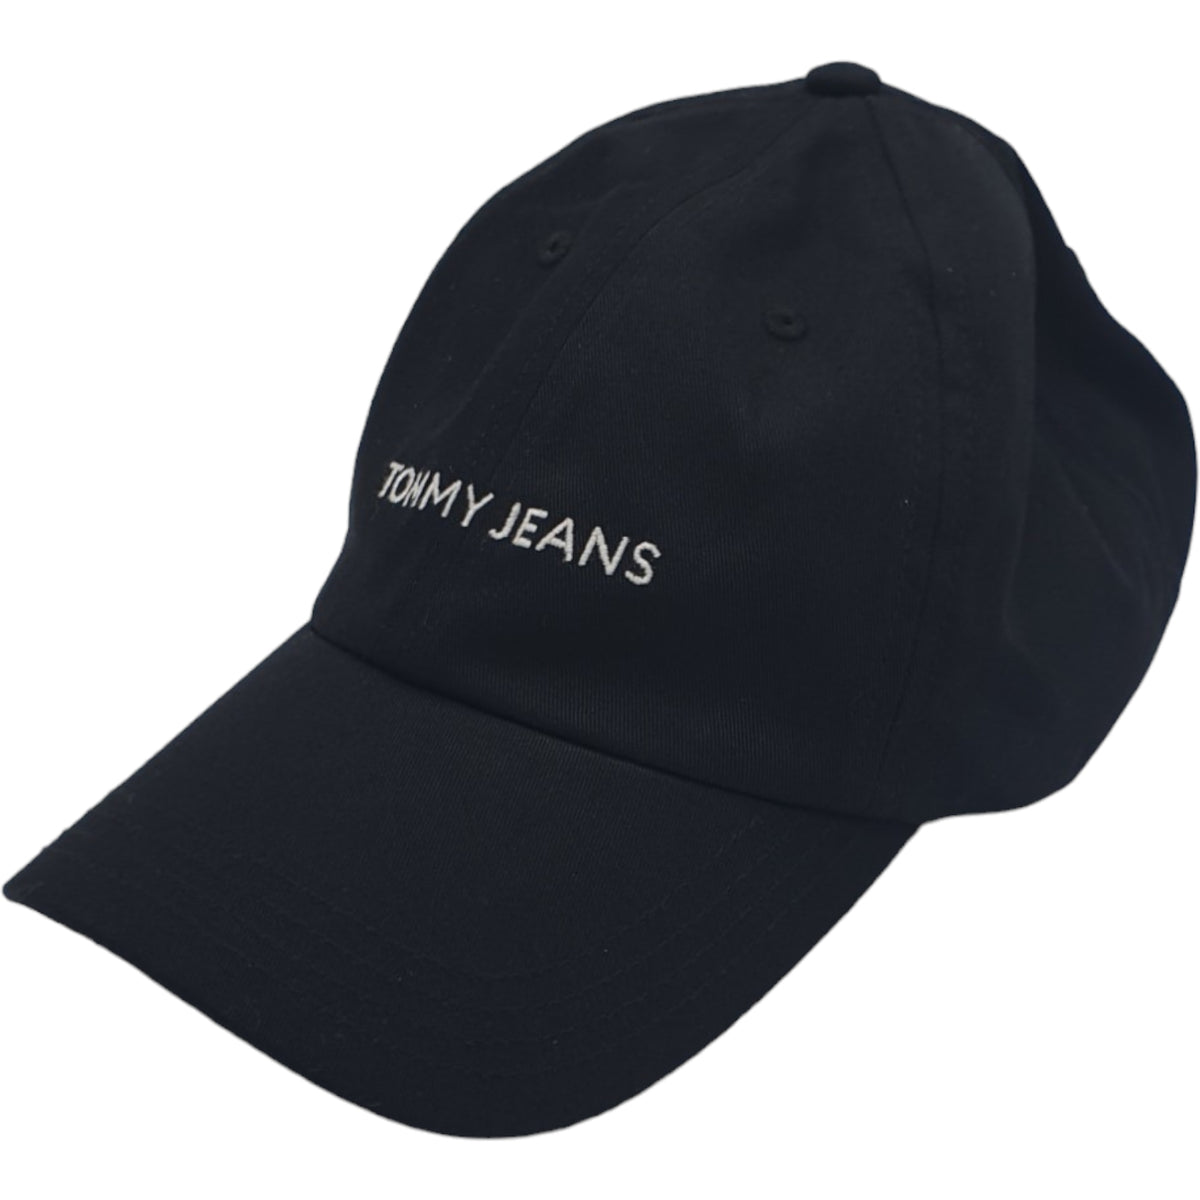 Tommy Jeans Black Linear Logo Cap